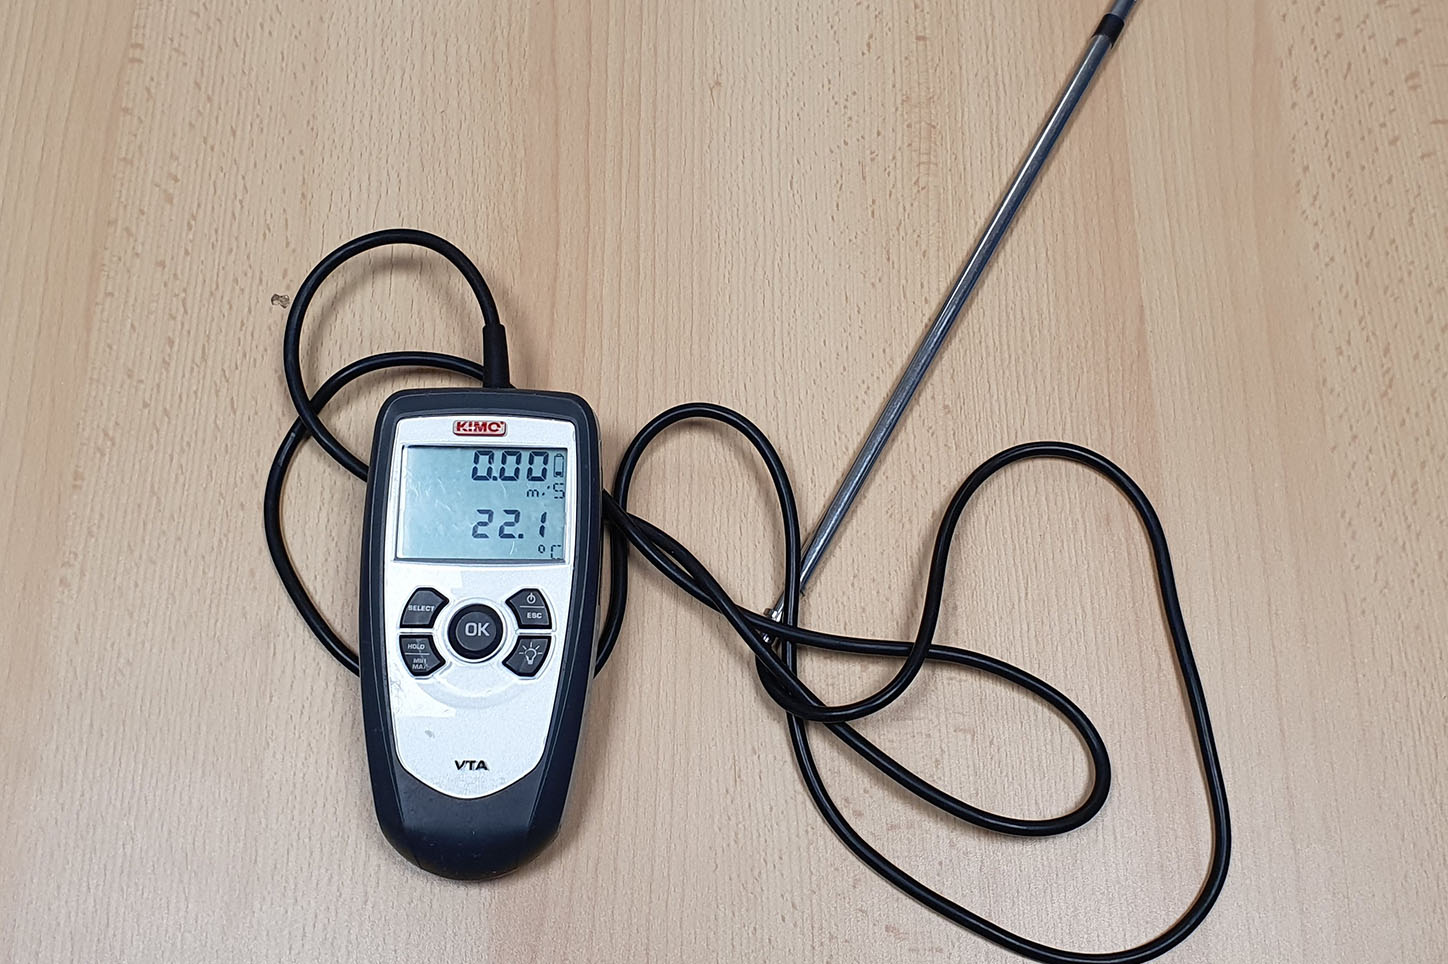 TESTO - Thermomètre hygromètre TESTO606-2 pour mesure humidité